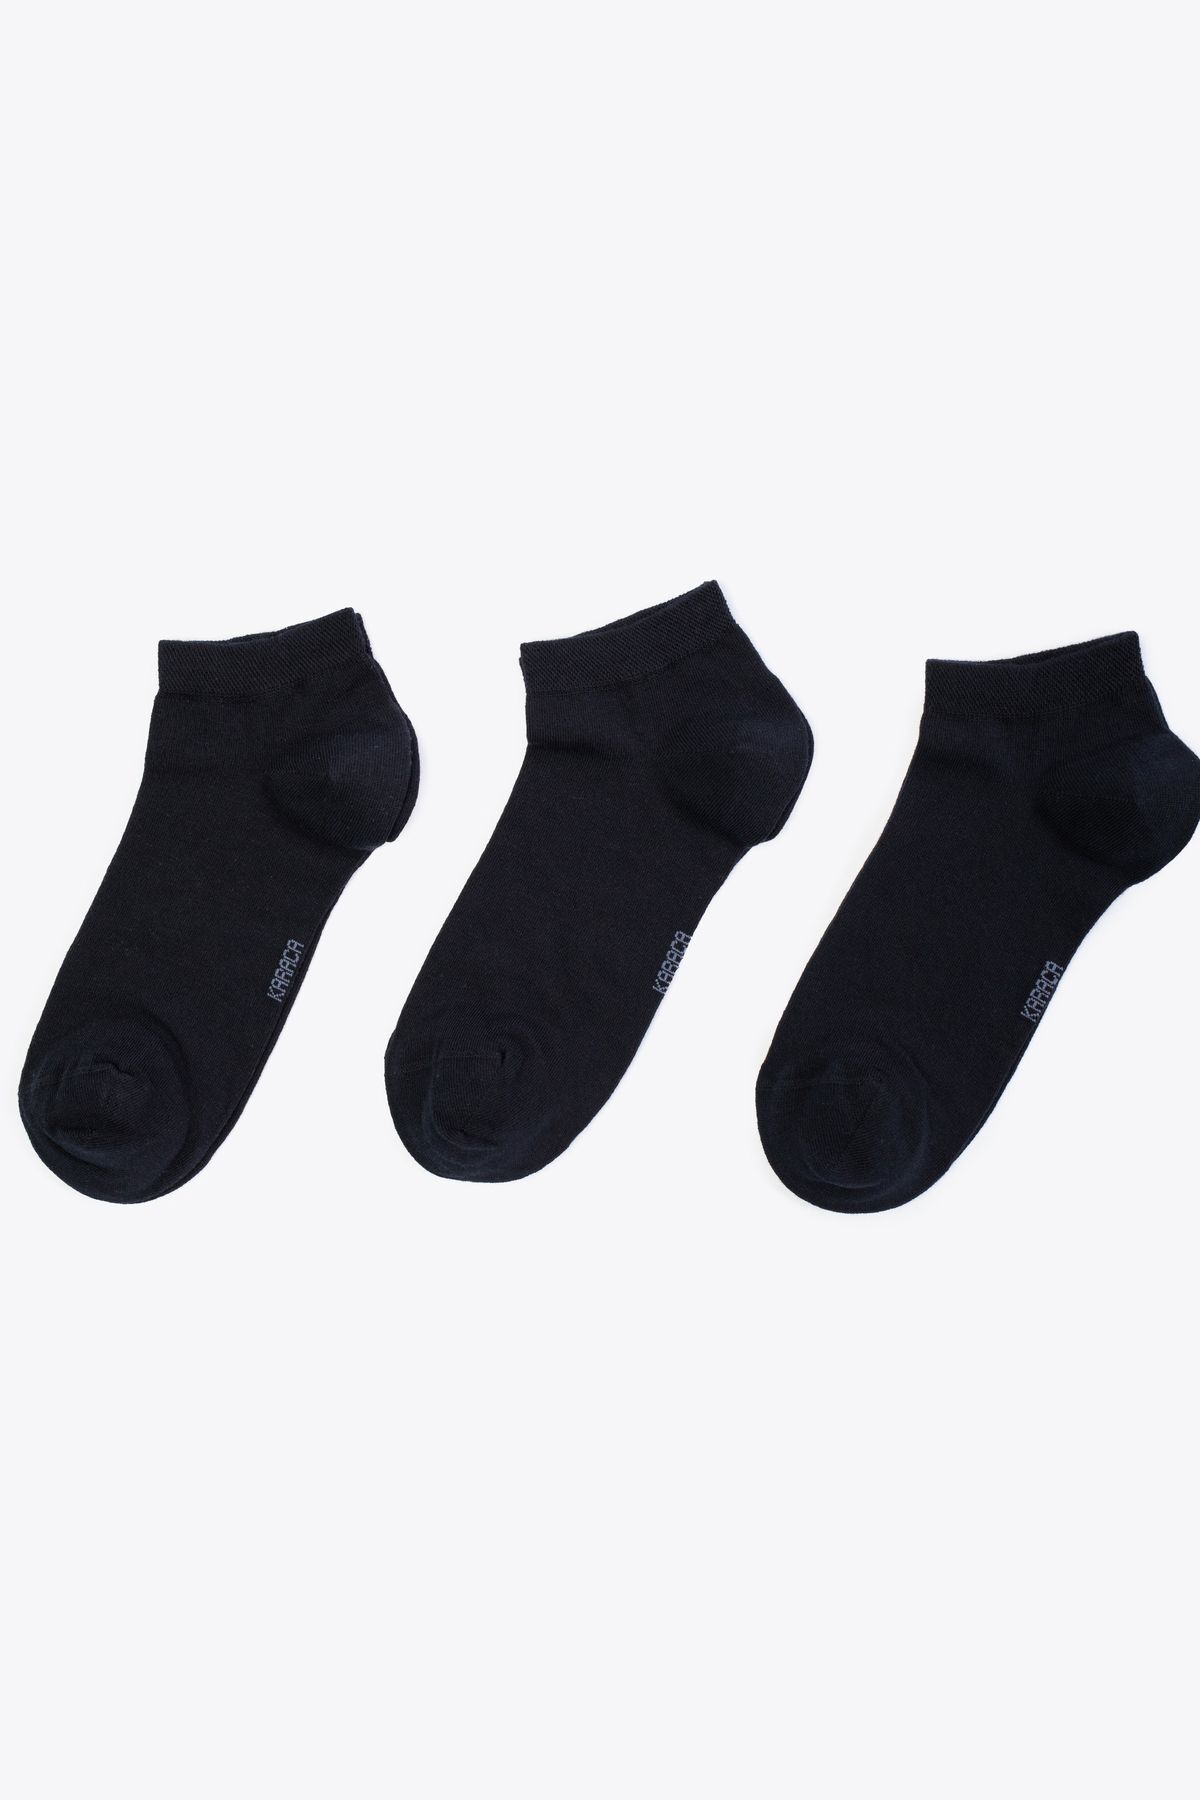 Karaca Erkek Soket Çorap-Lacivert